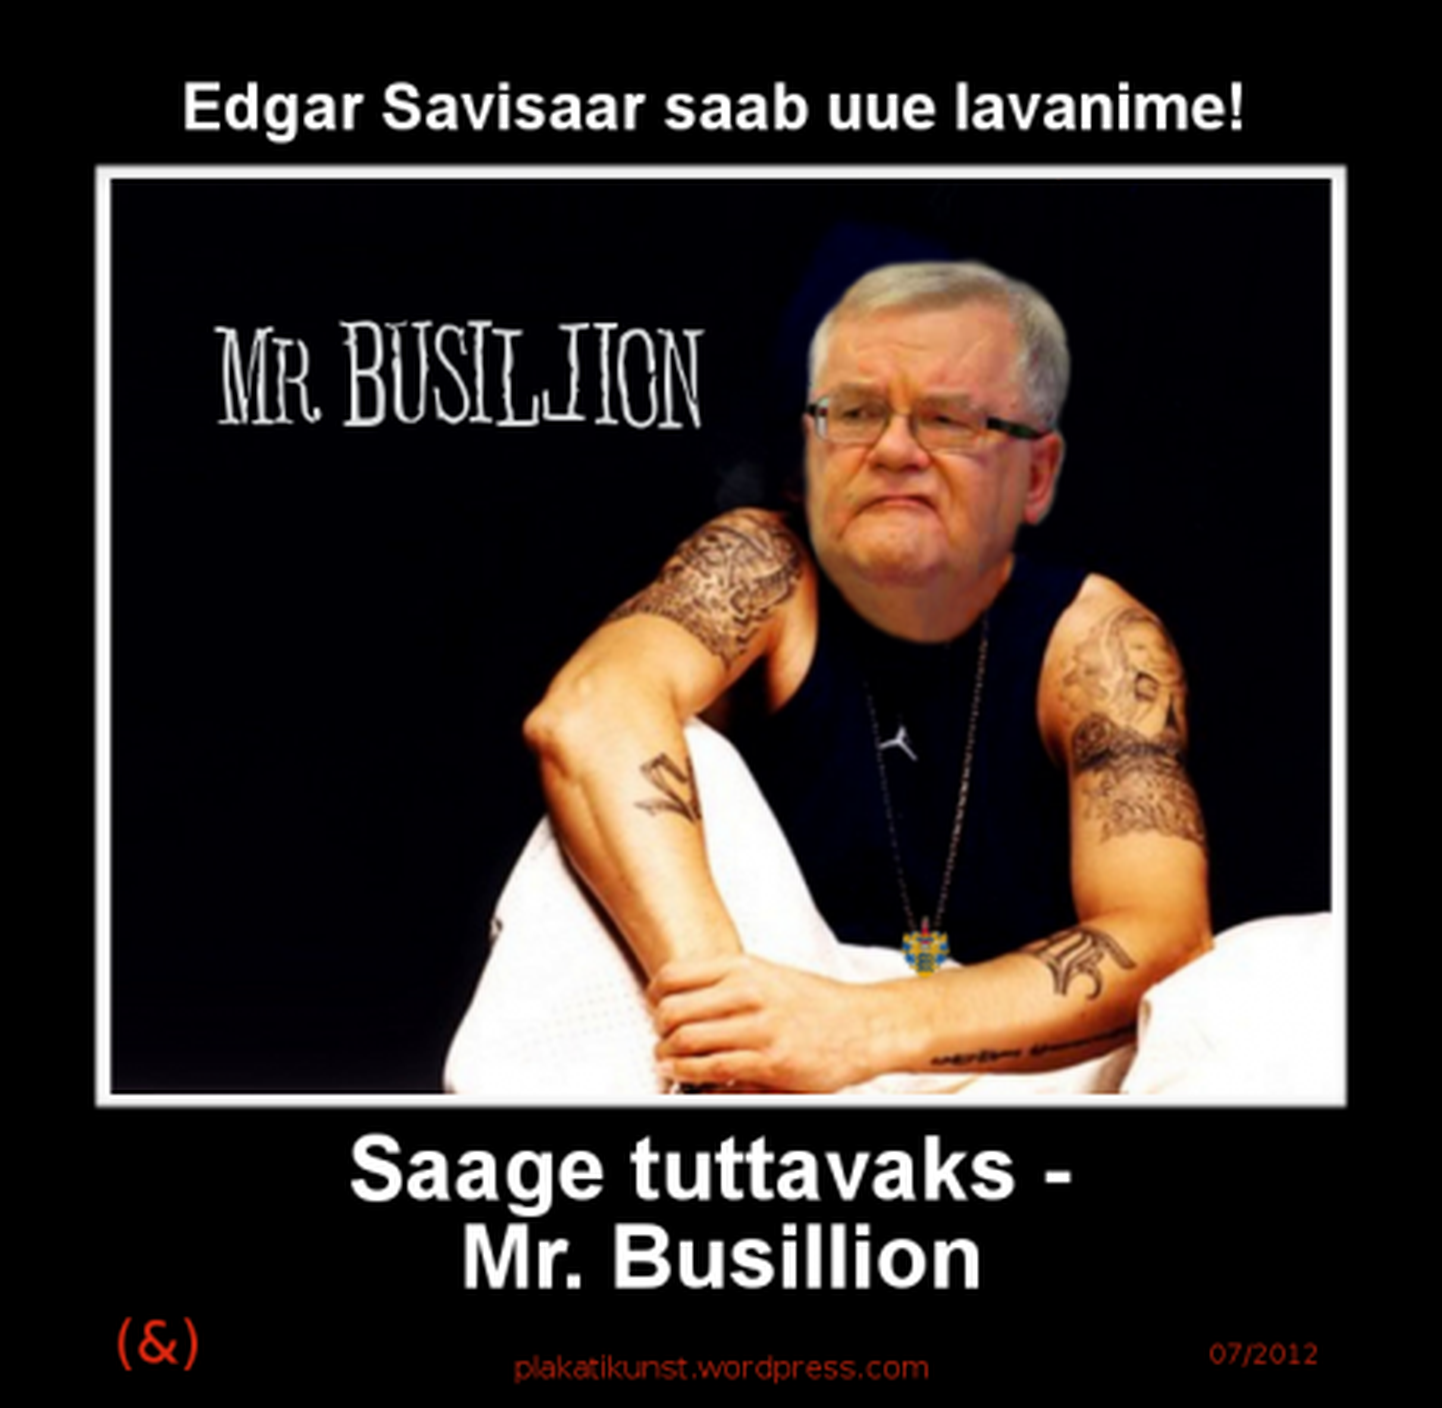 Mr Busillion aka Edgar Savisaar